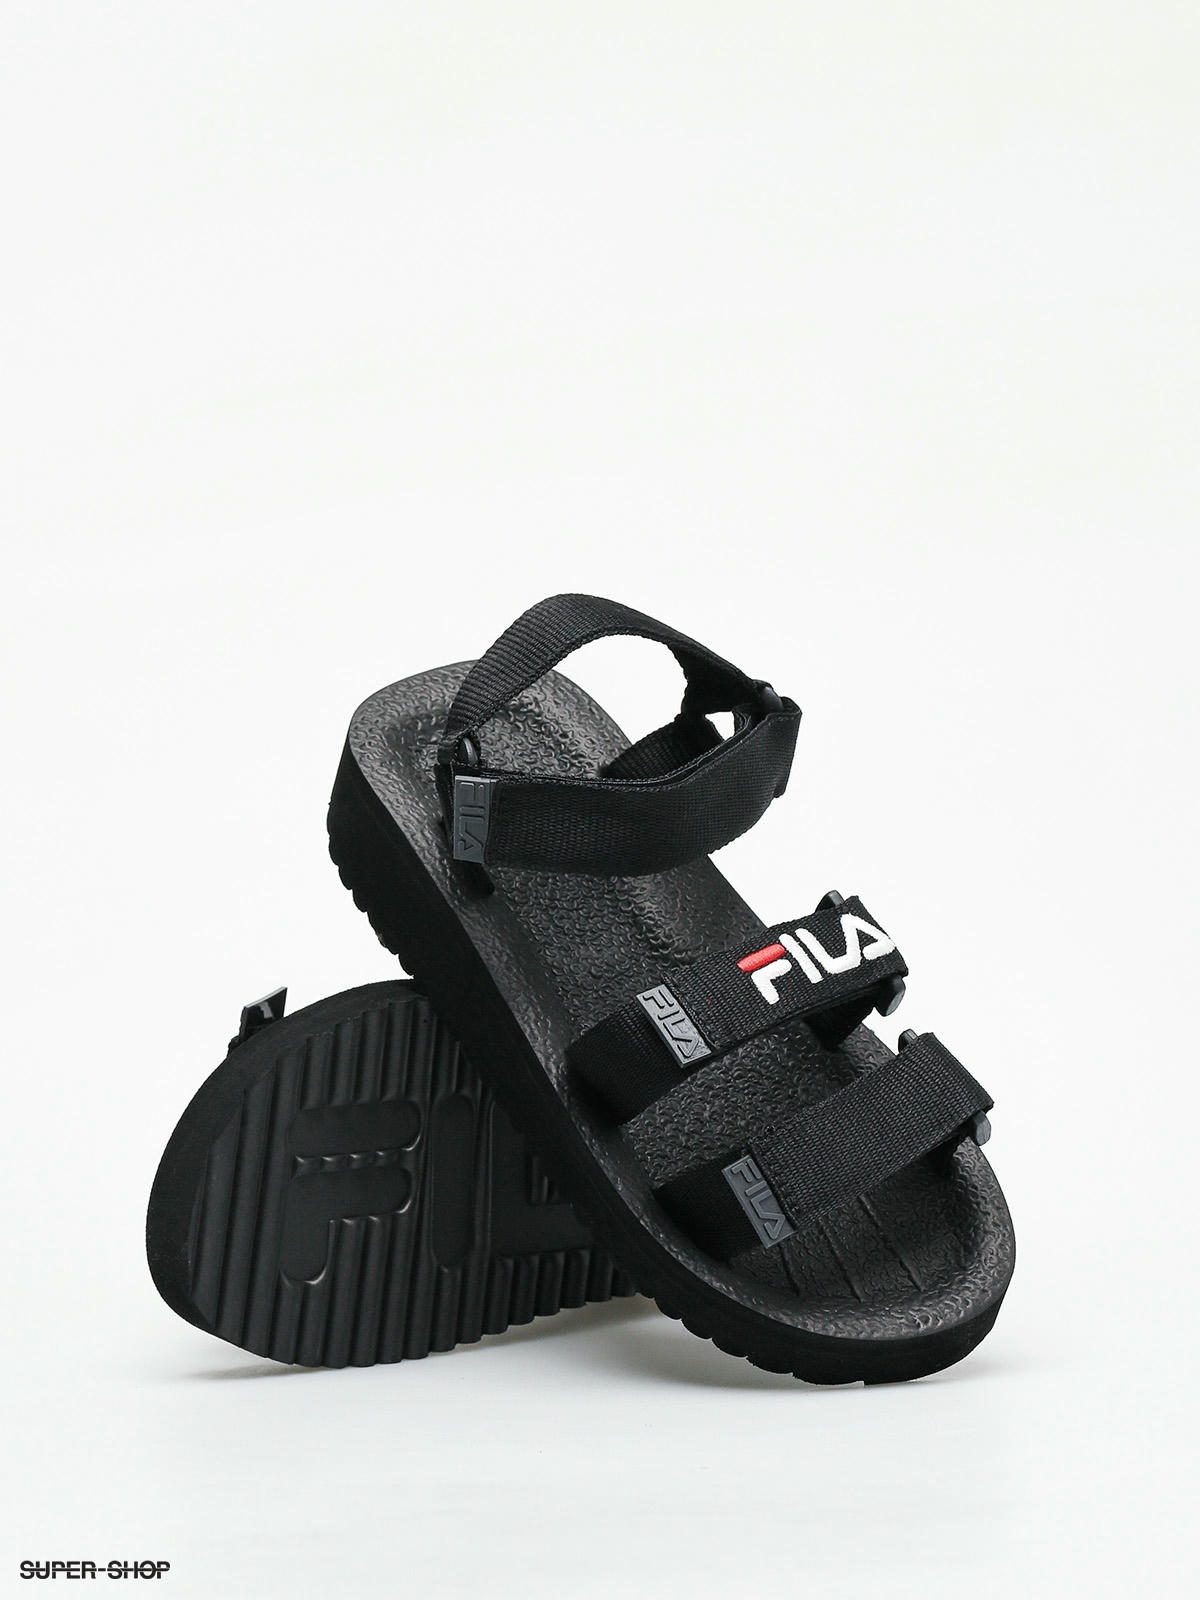 fila sandal black